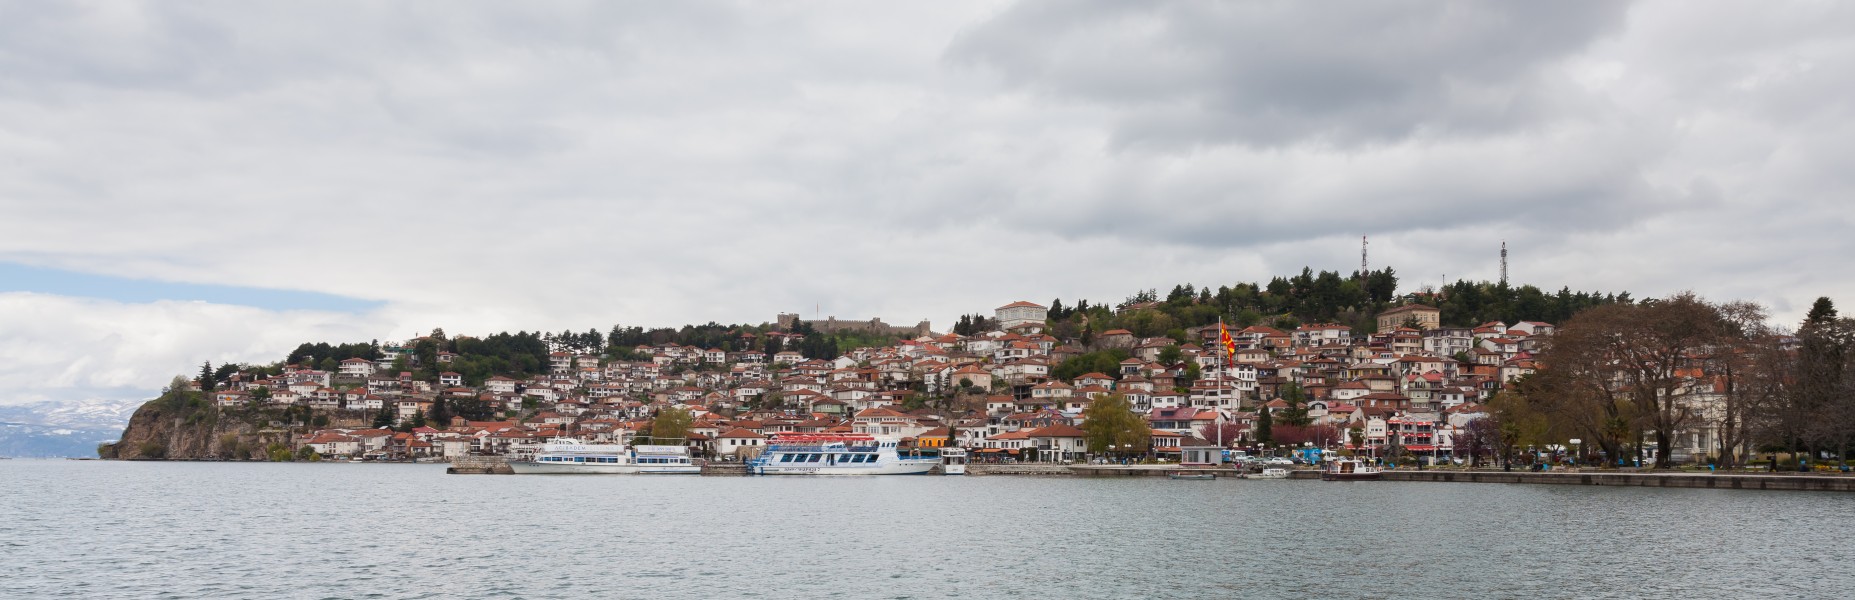 Vista de Ohrid, Macedonia, 2014-04-17, DD 01